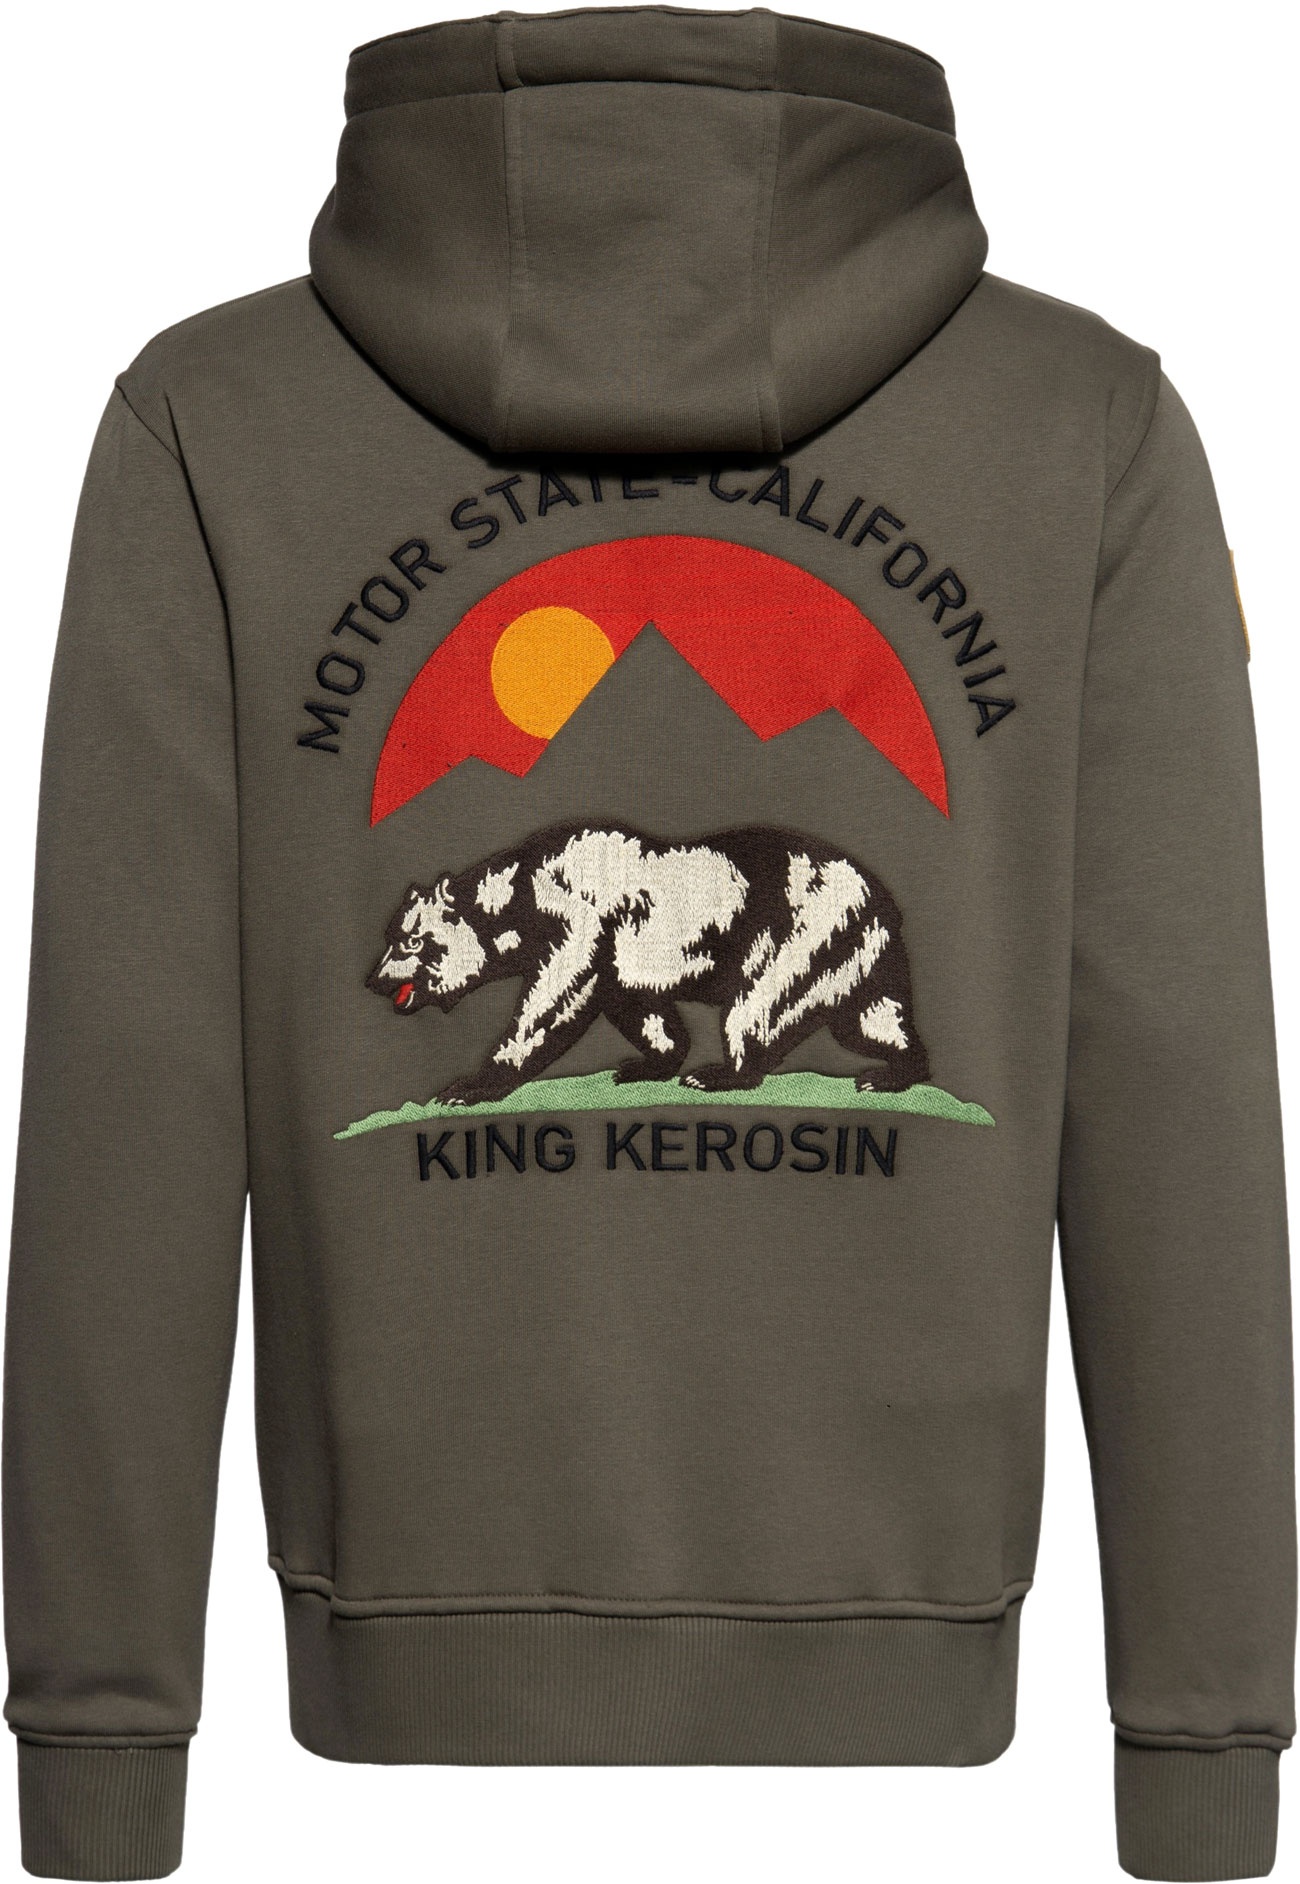 King Kerosin Motor Gear - Motor State California, Sweat à capuch - Marron - XXL